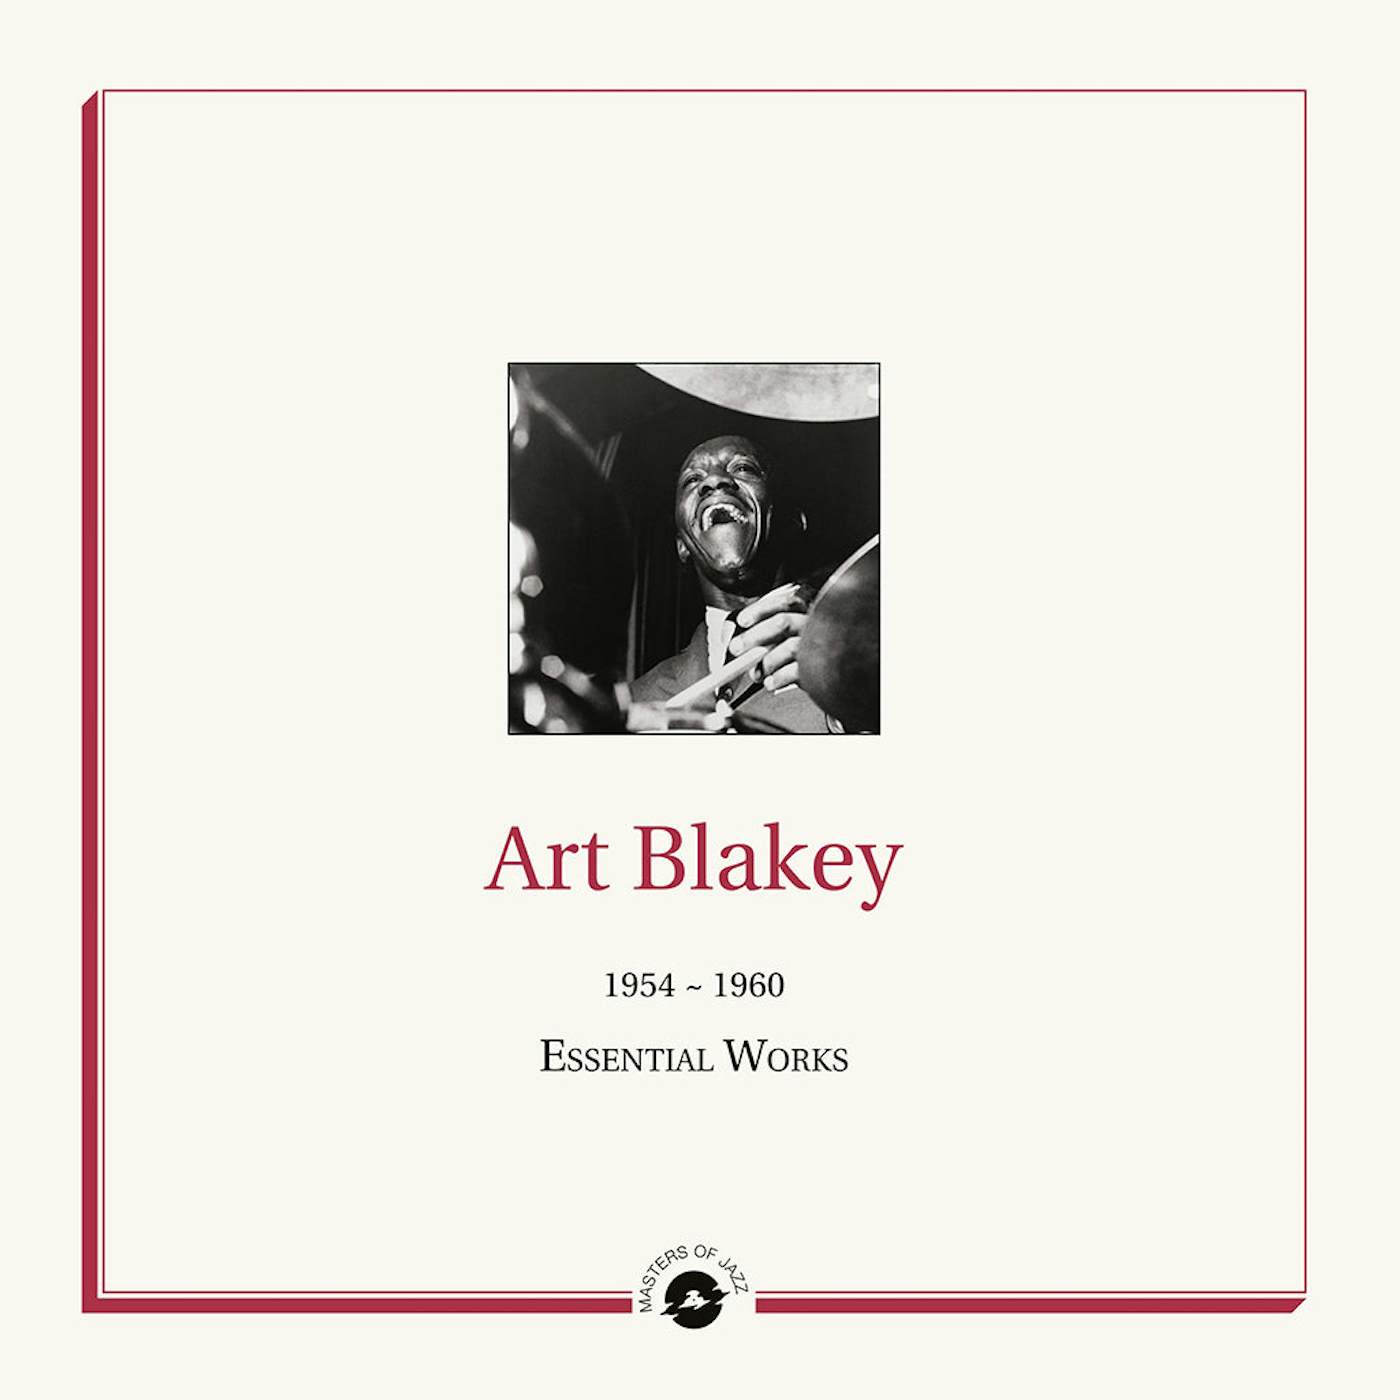 Art Blakey ESSENTIAL WORKS 1954-1960 Vinyl Record